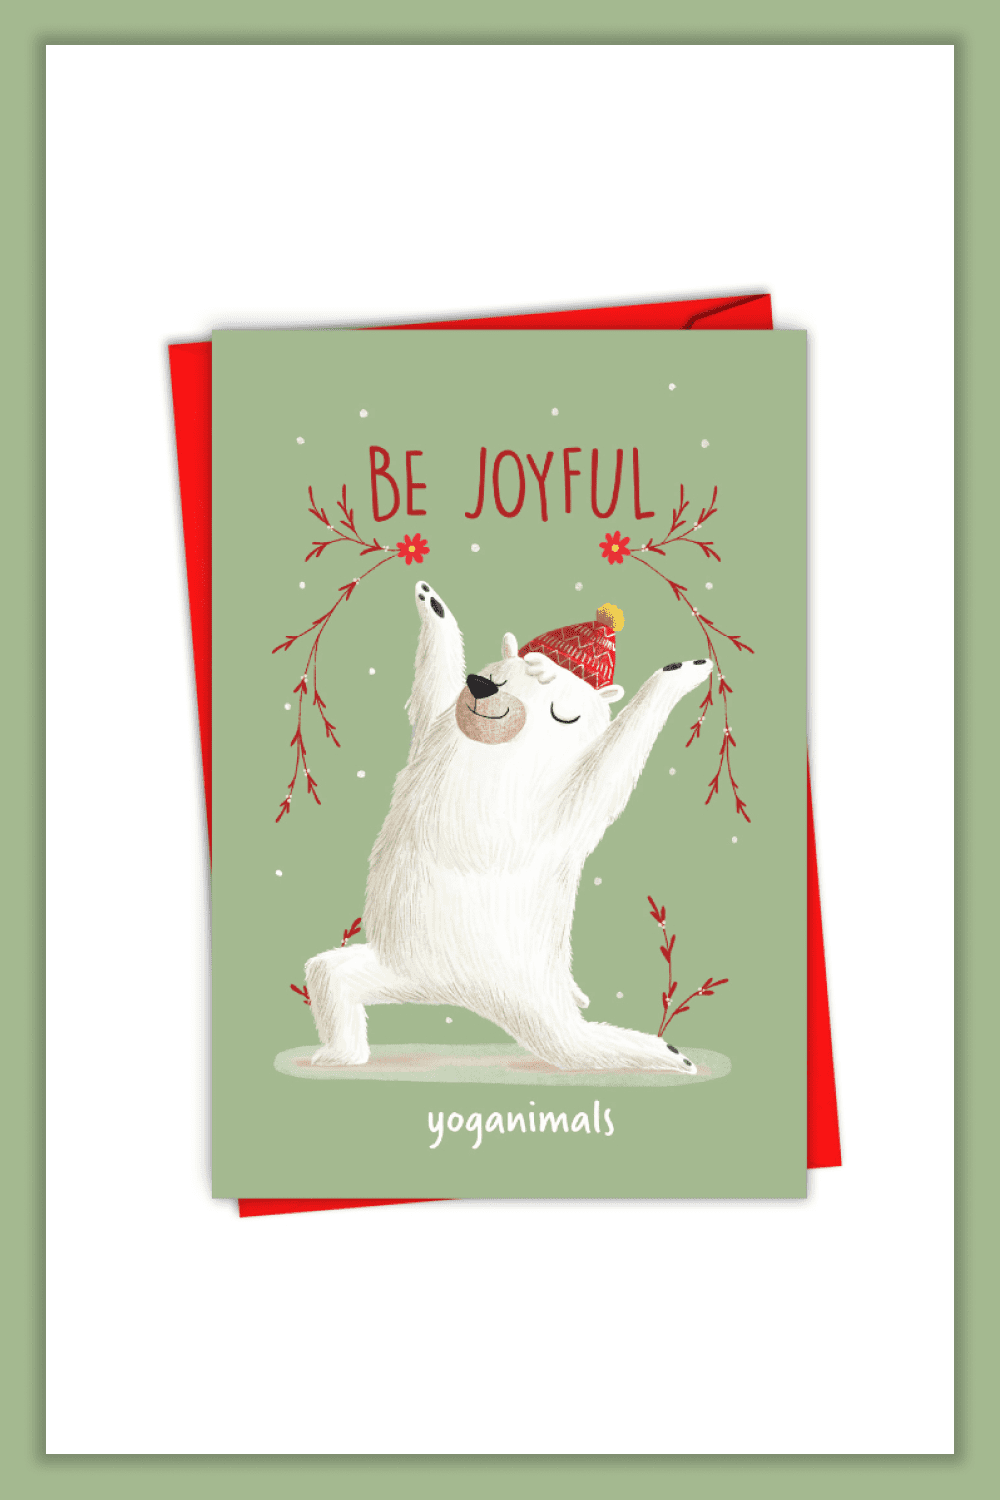 Card with a bear in funny yoga asana.